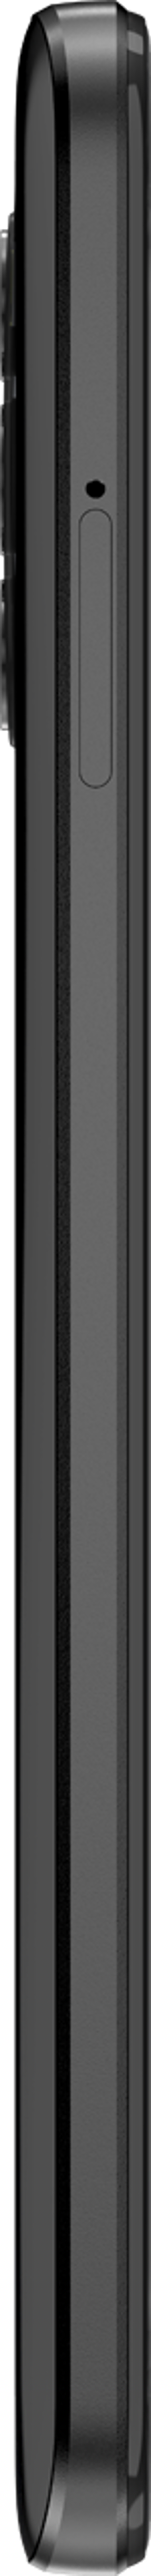 Motorola Moto G71 128GB Kaksois-SIM Raudan musta